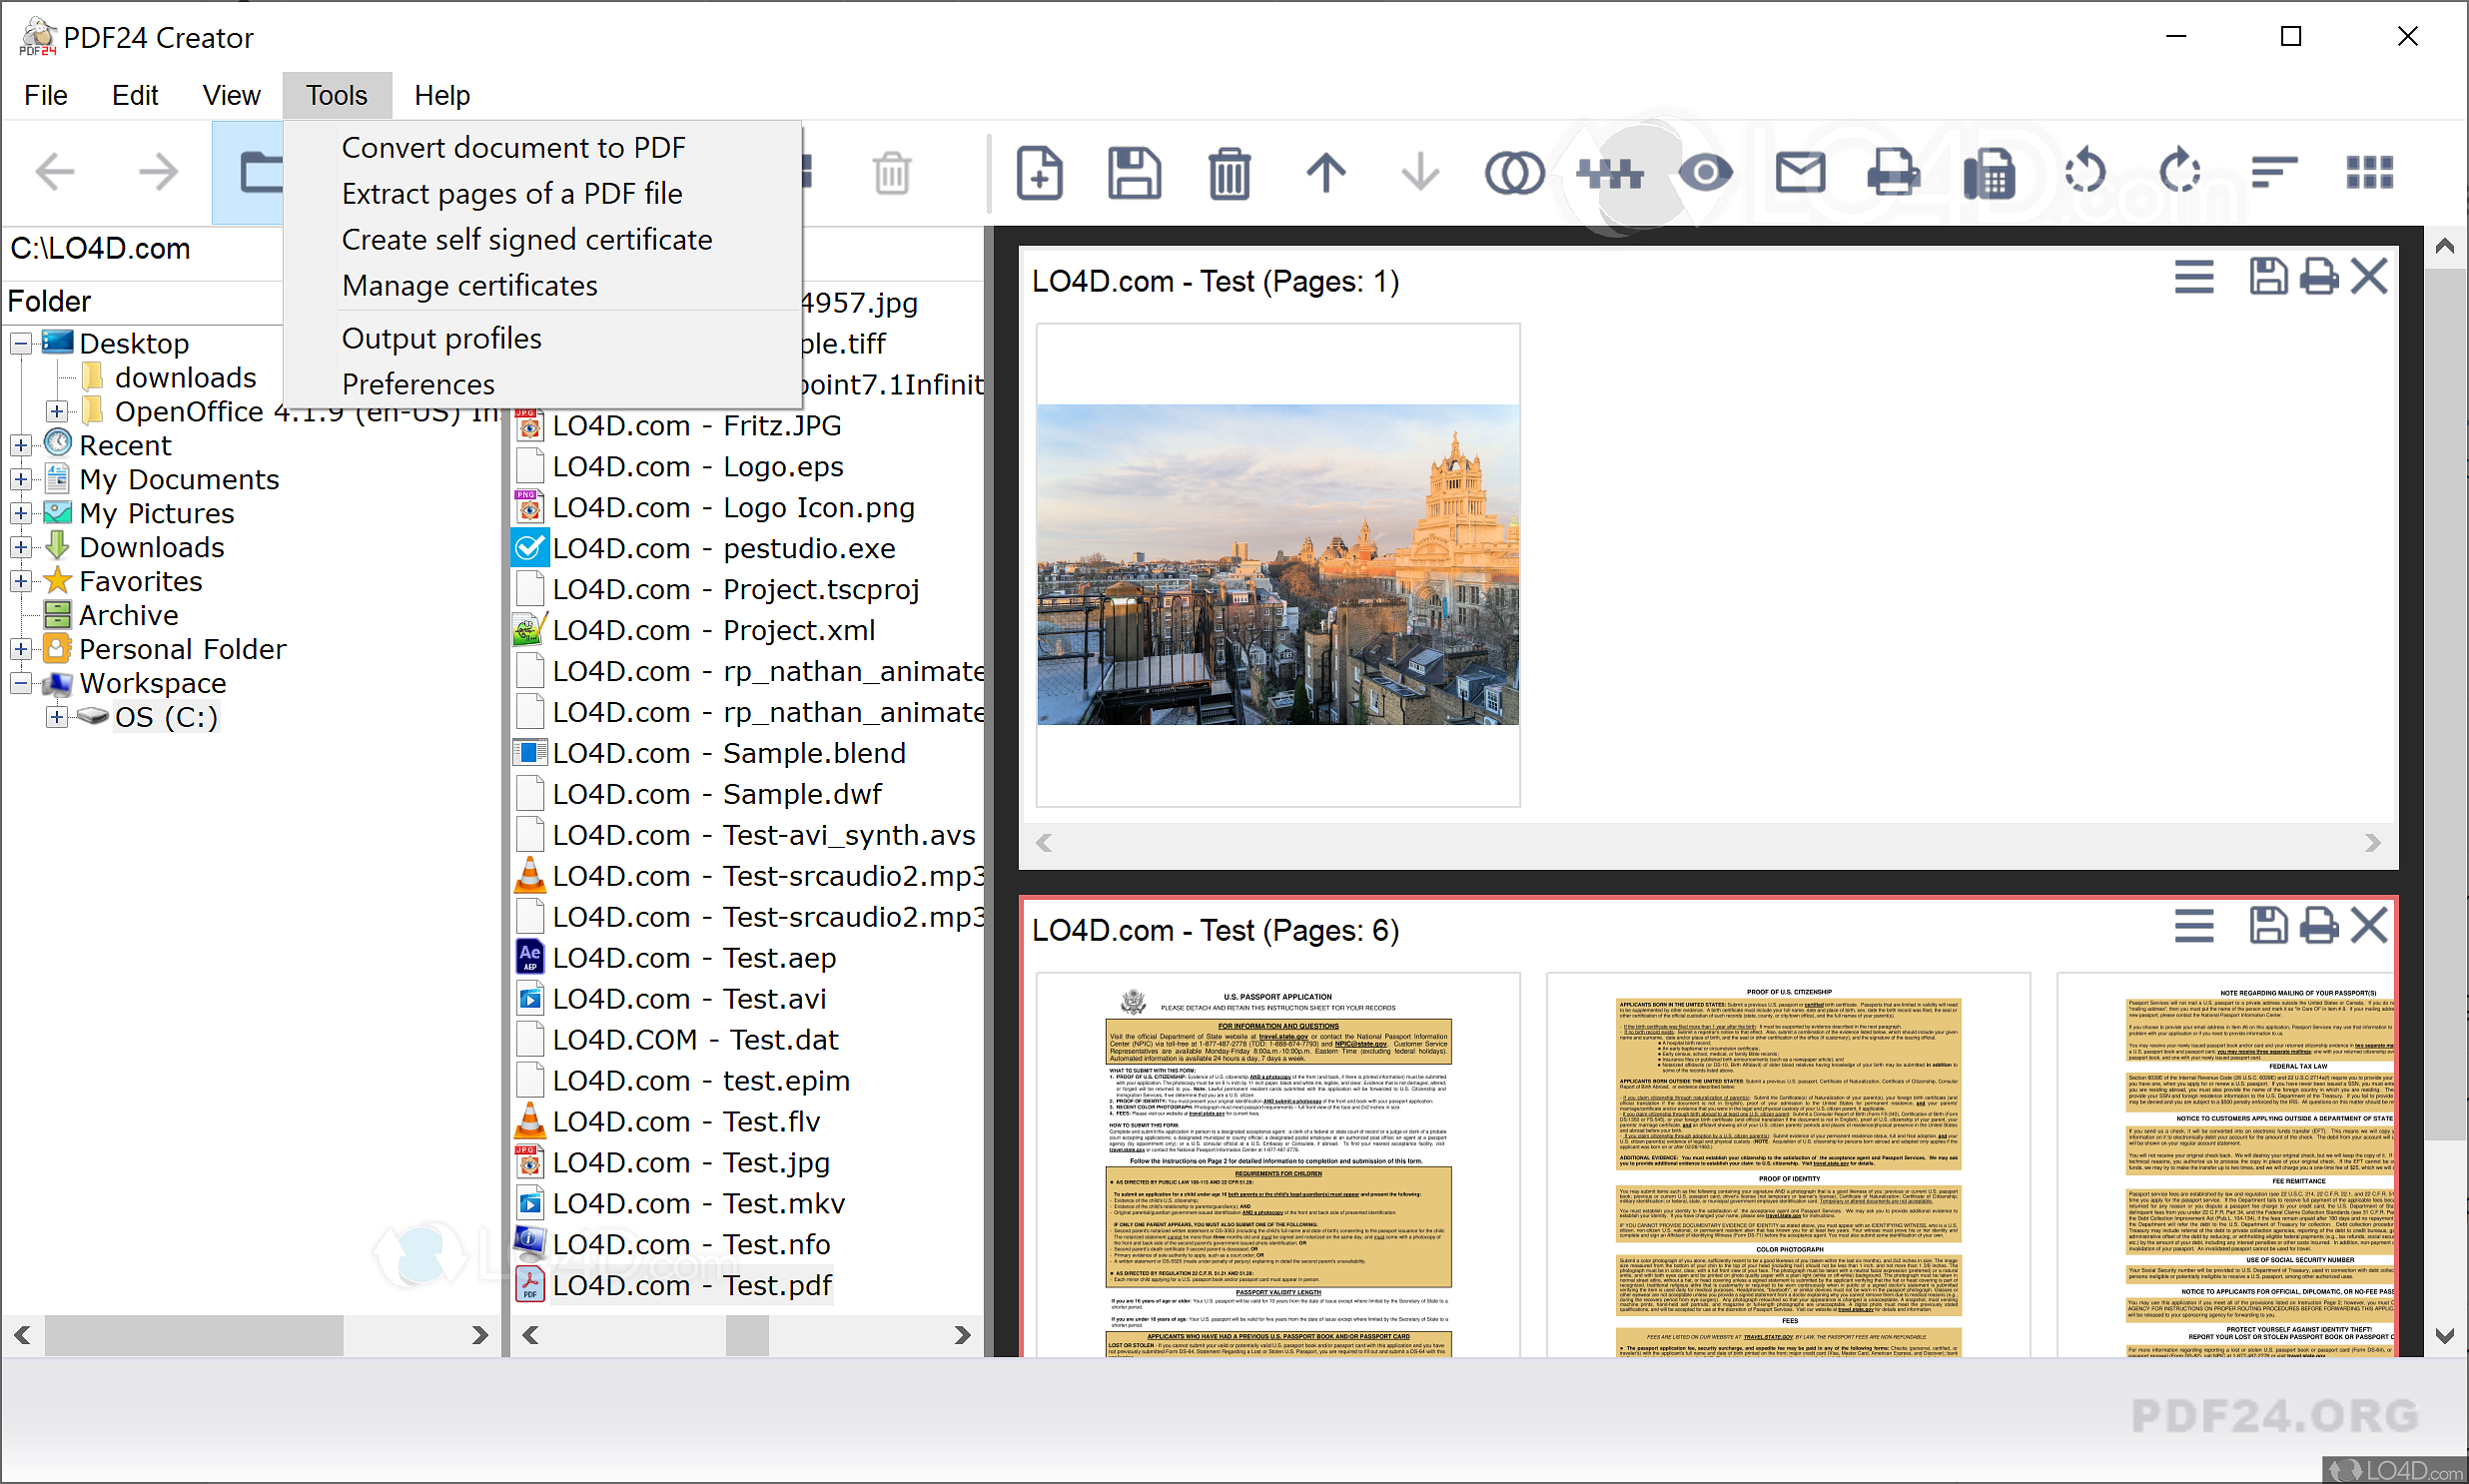 PDF24 Creator 11.15.2 instal the last version for windows